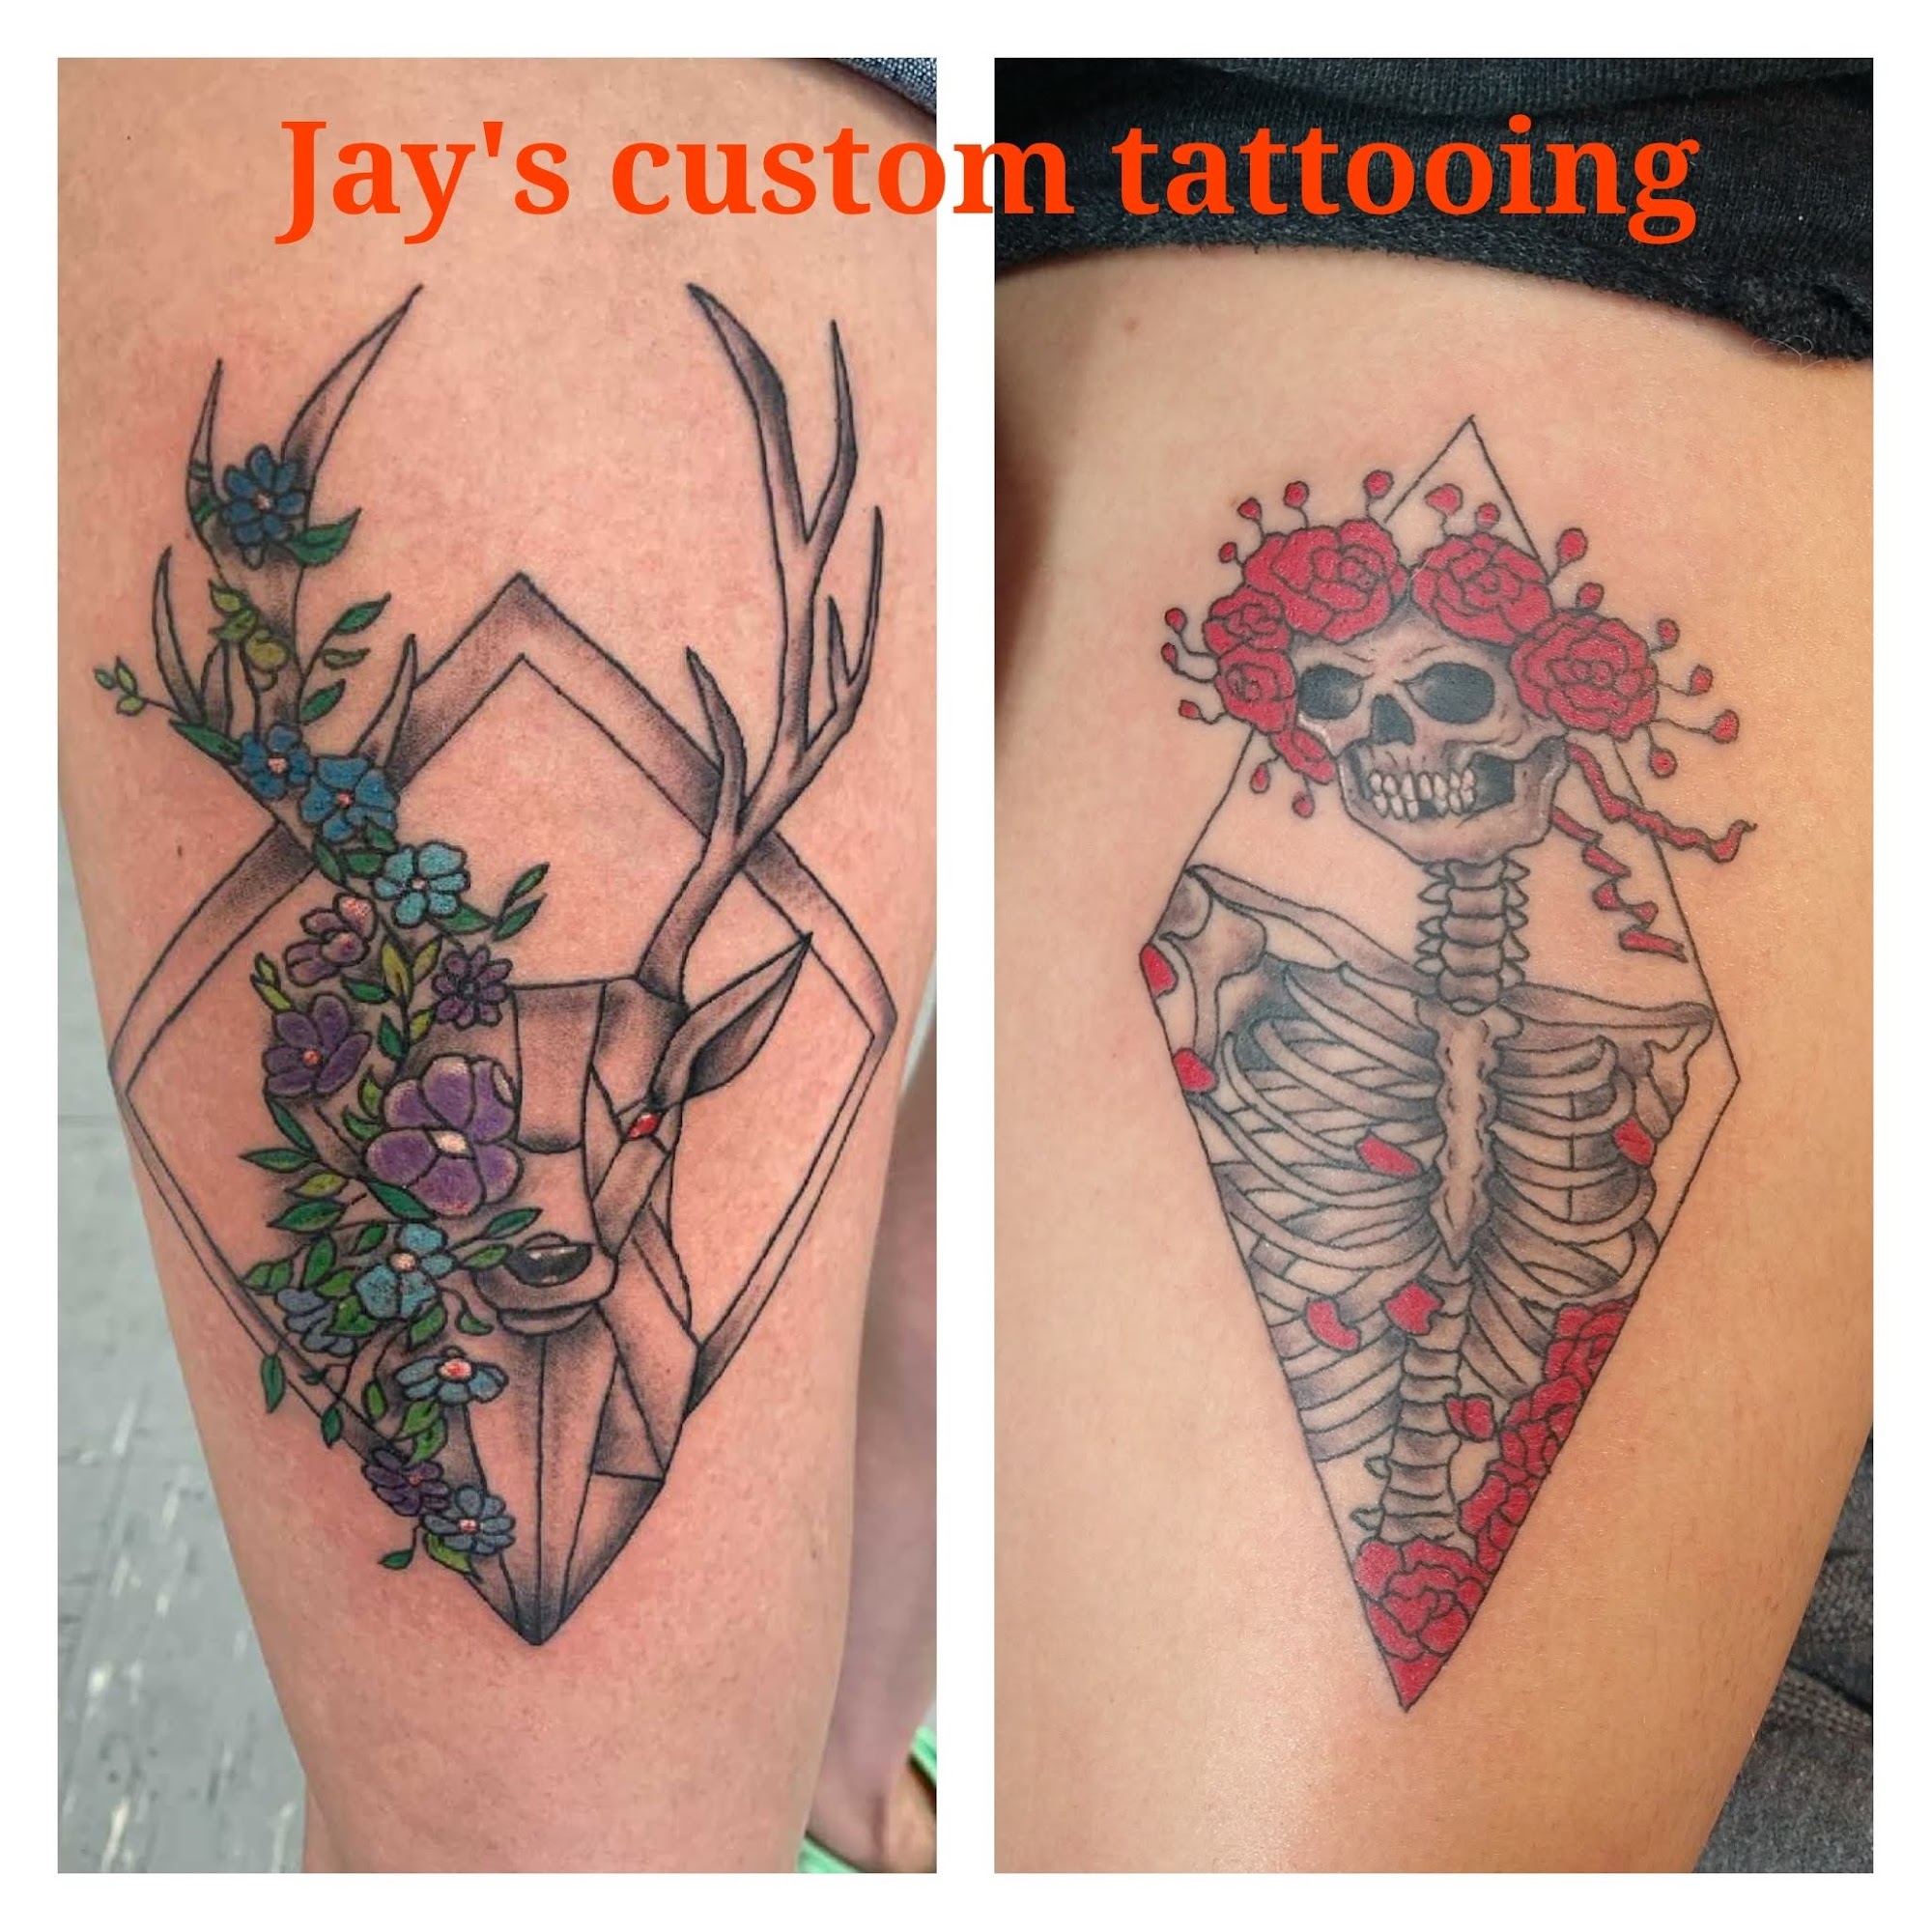 Jay's Custom Tattooing 110 N Main St, Wingate North Carolina 28174